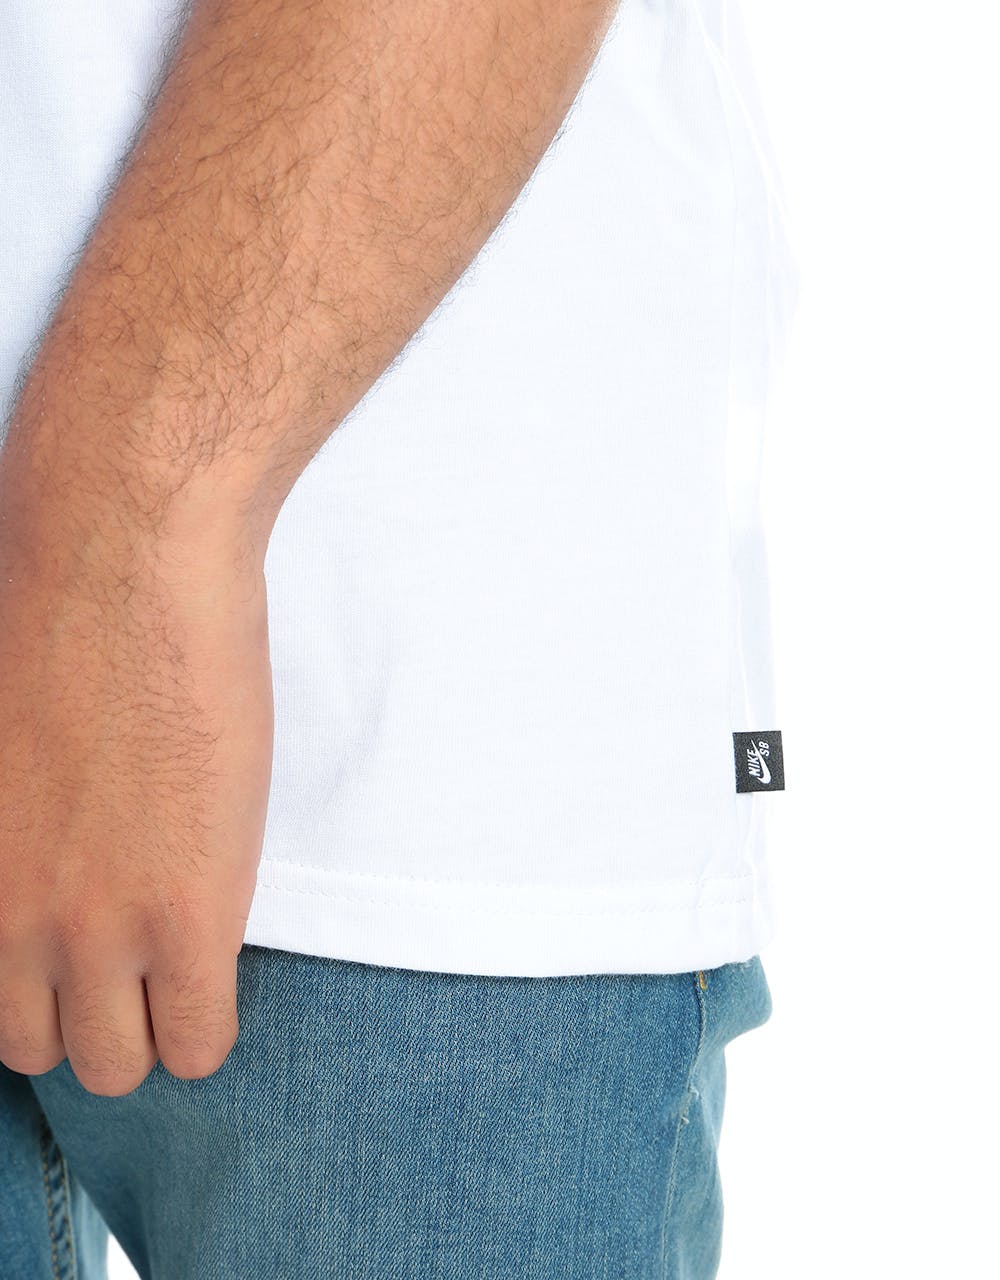 Nike SB Paradise Pocket T-Shirt - White